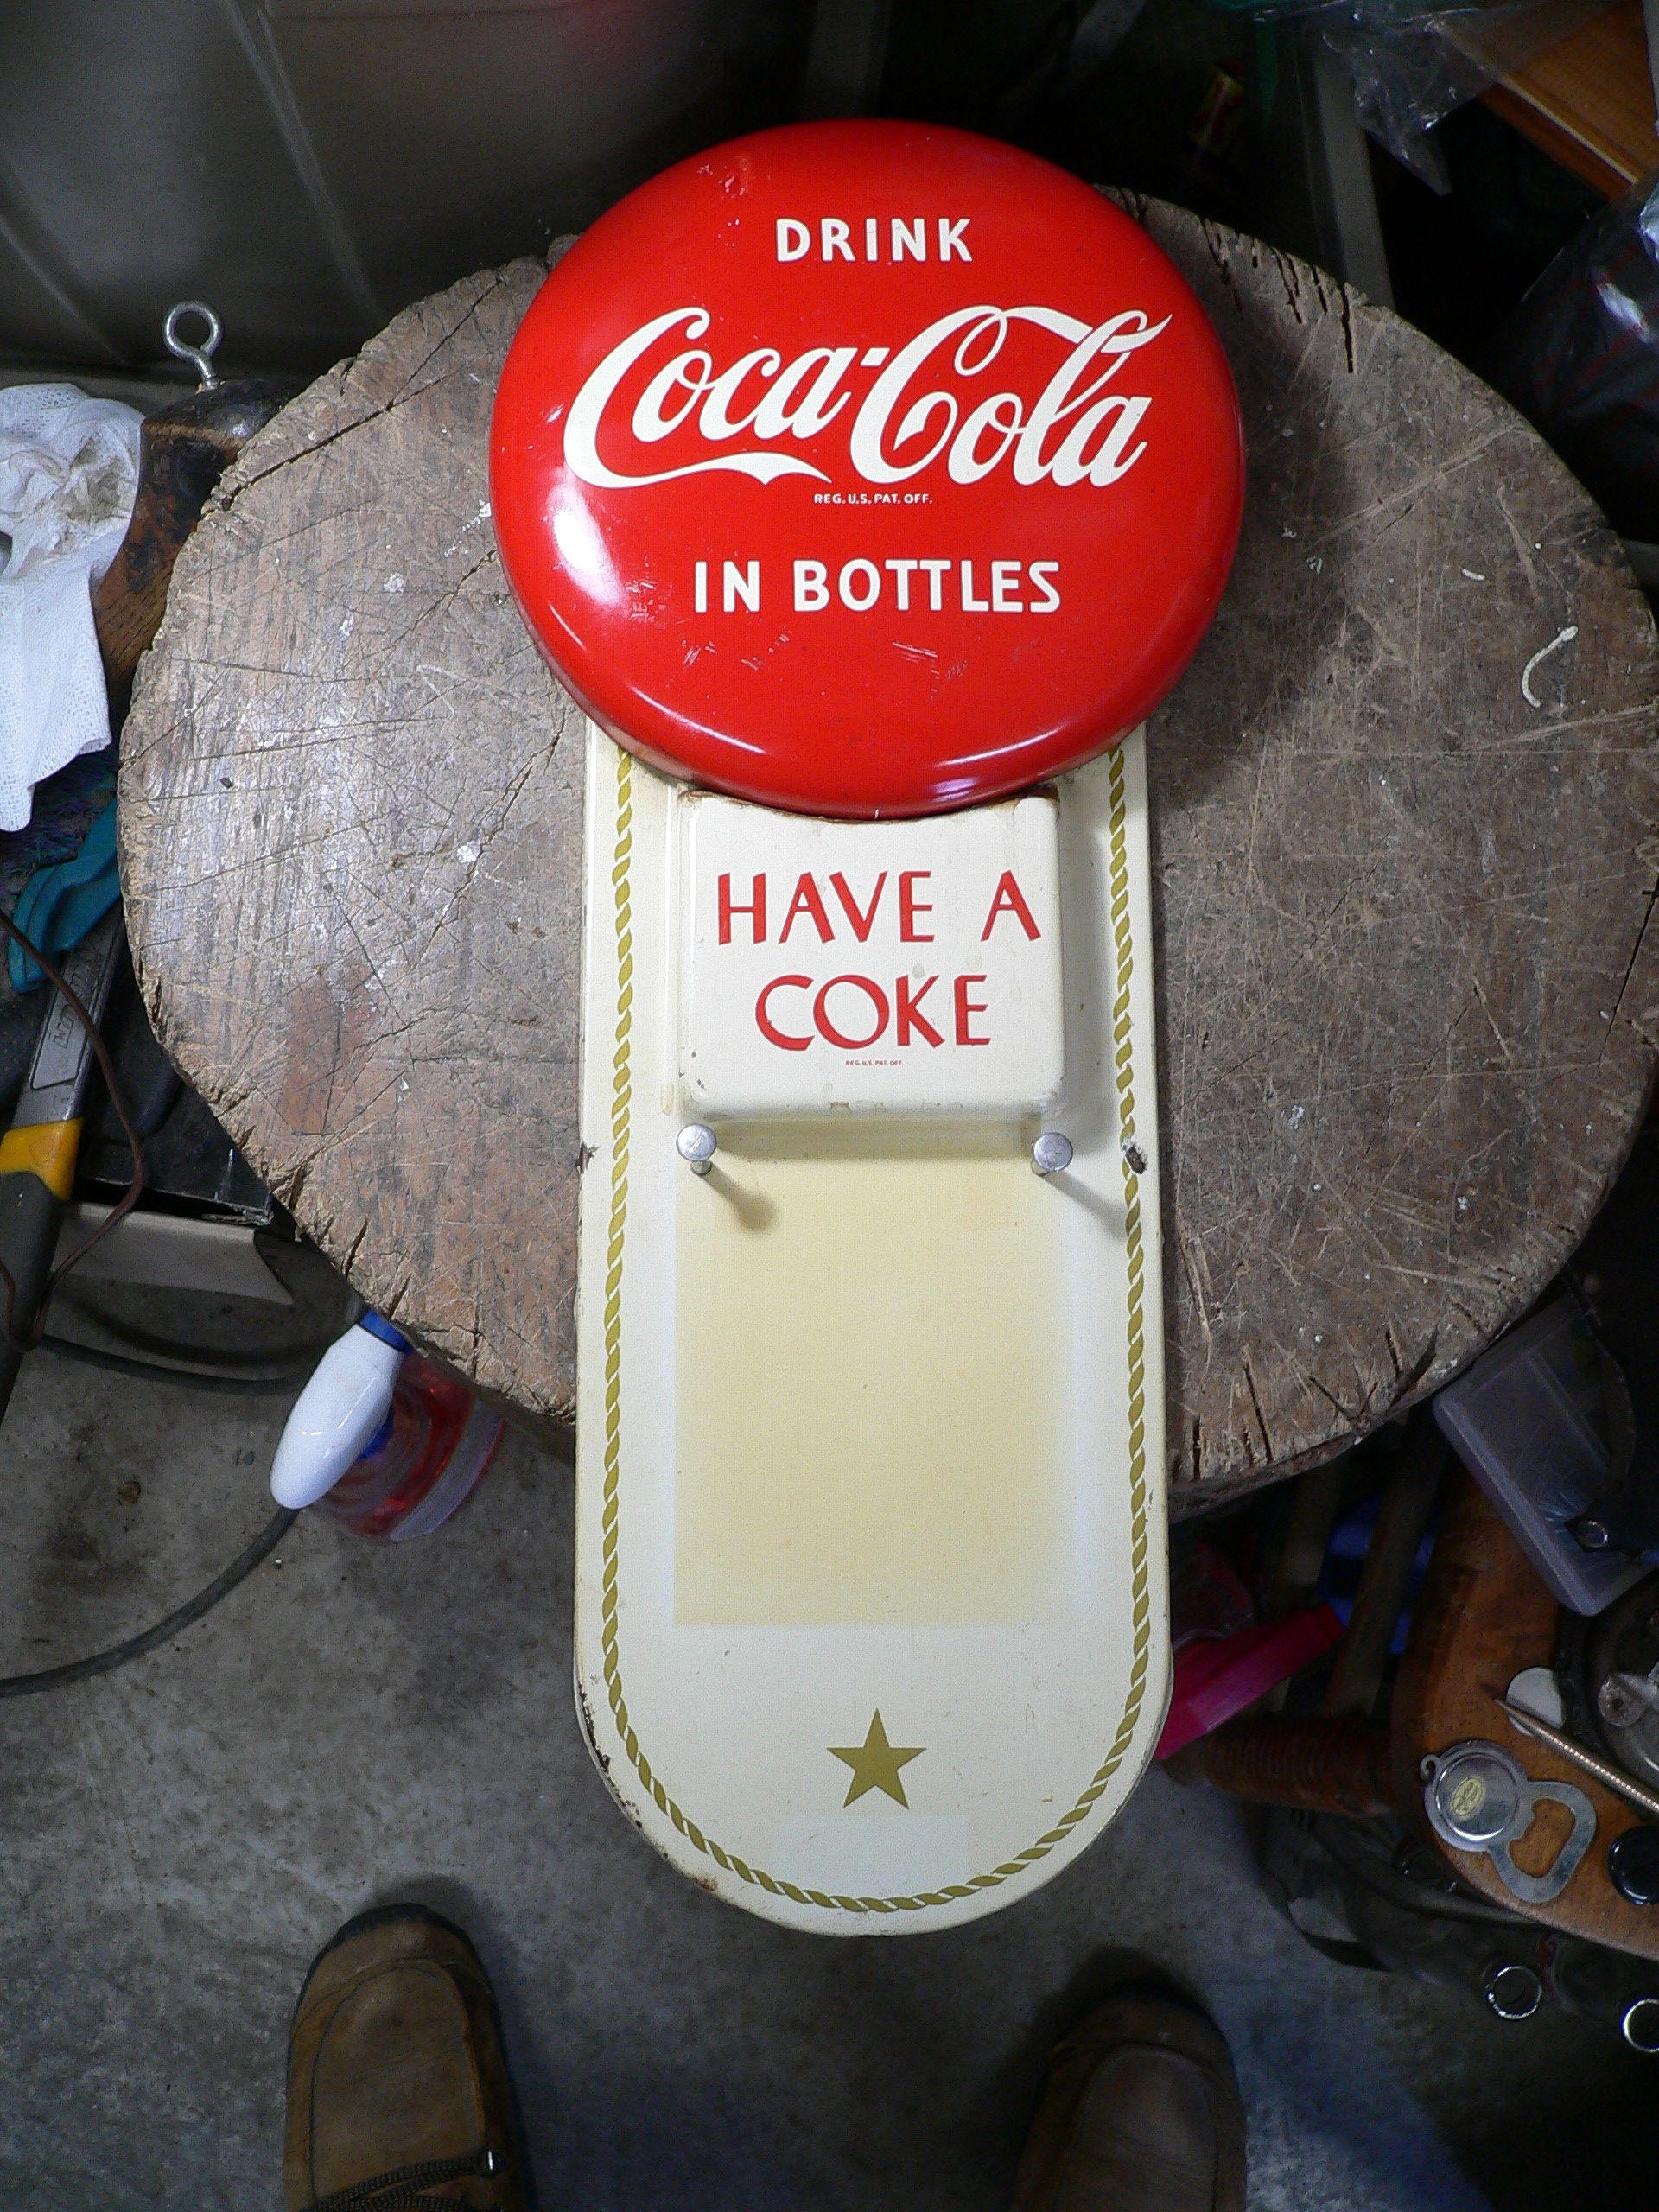 Calendrier coca cola antique # 11874